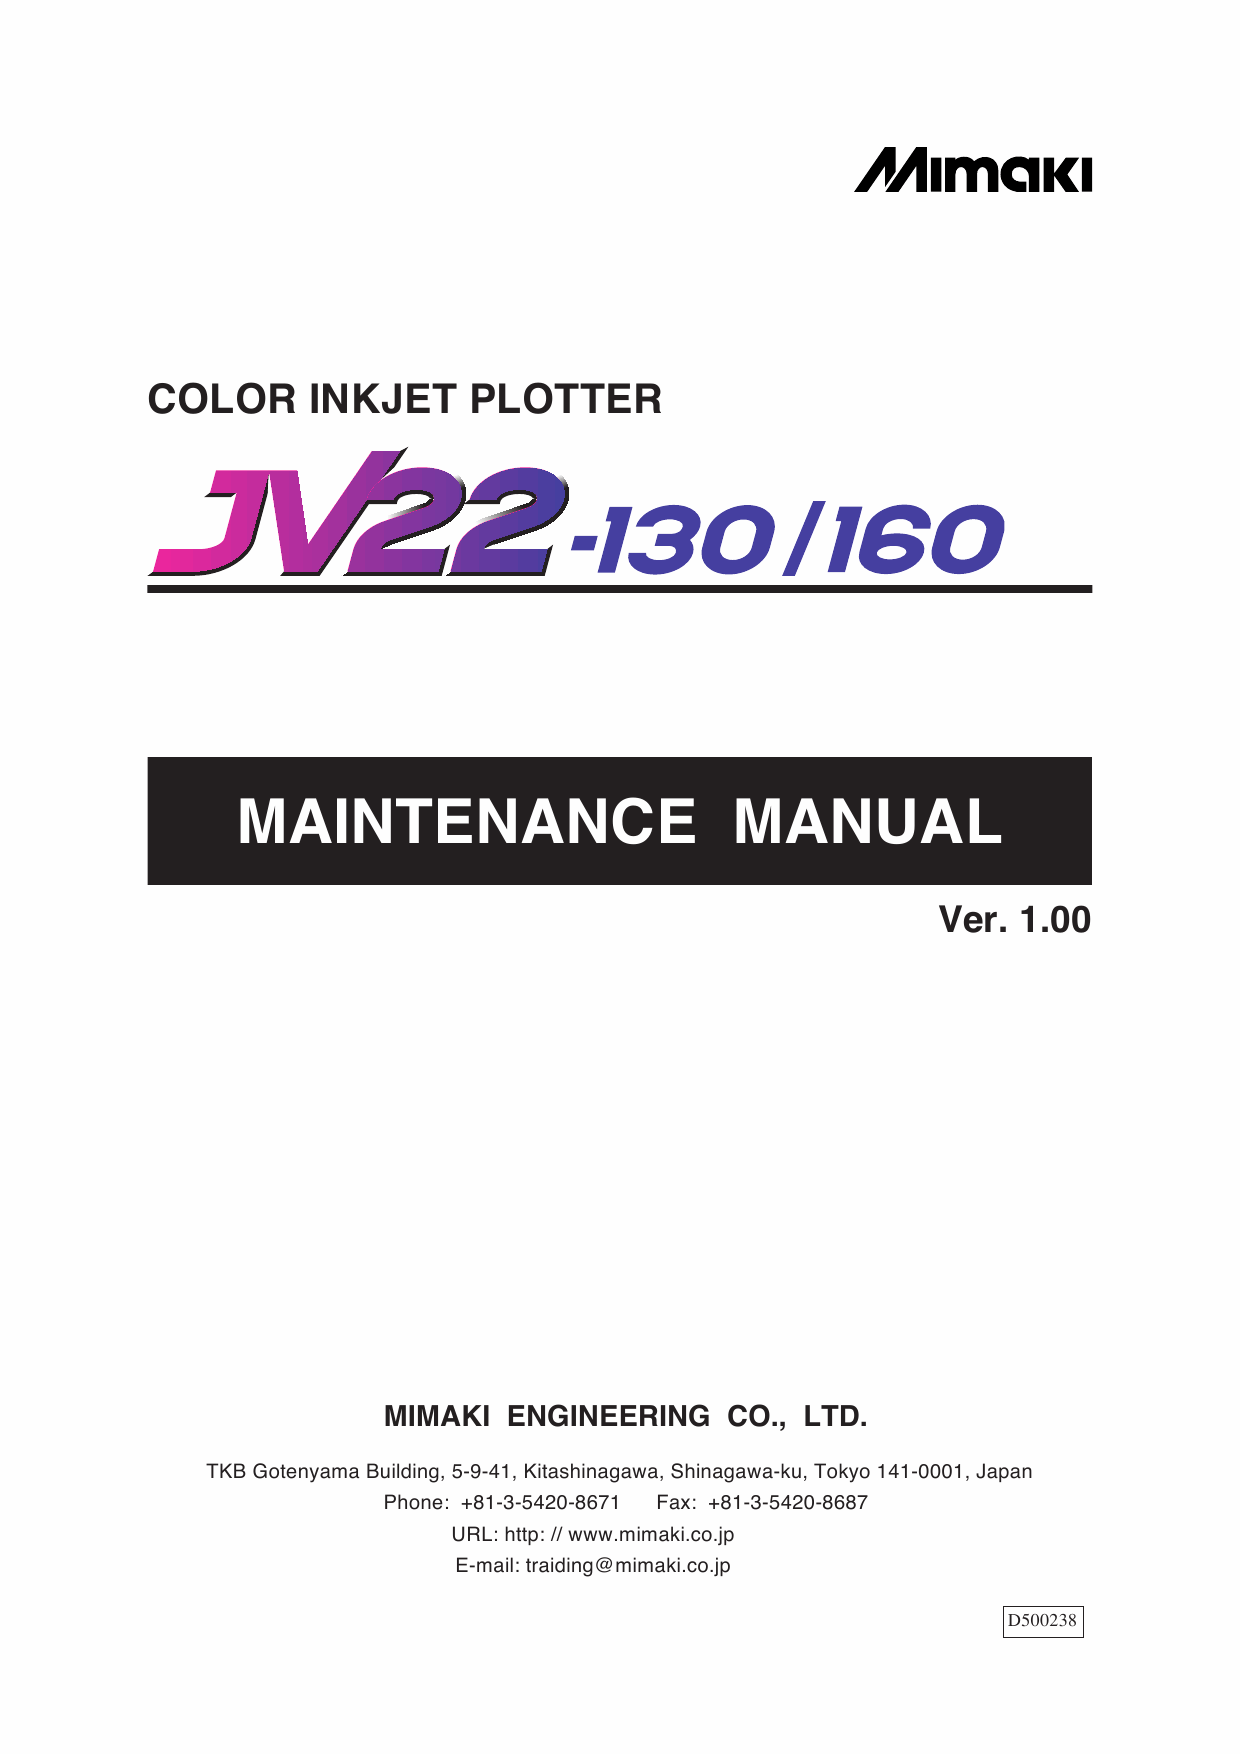 MIMAKI JV22 130 160 MAINTENANCE Service Manual-1